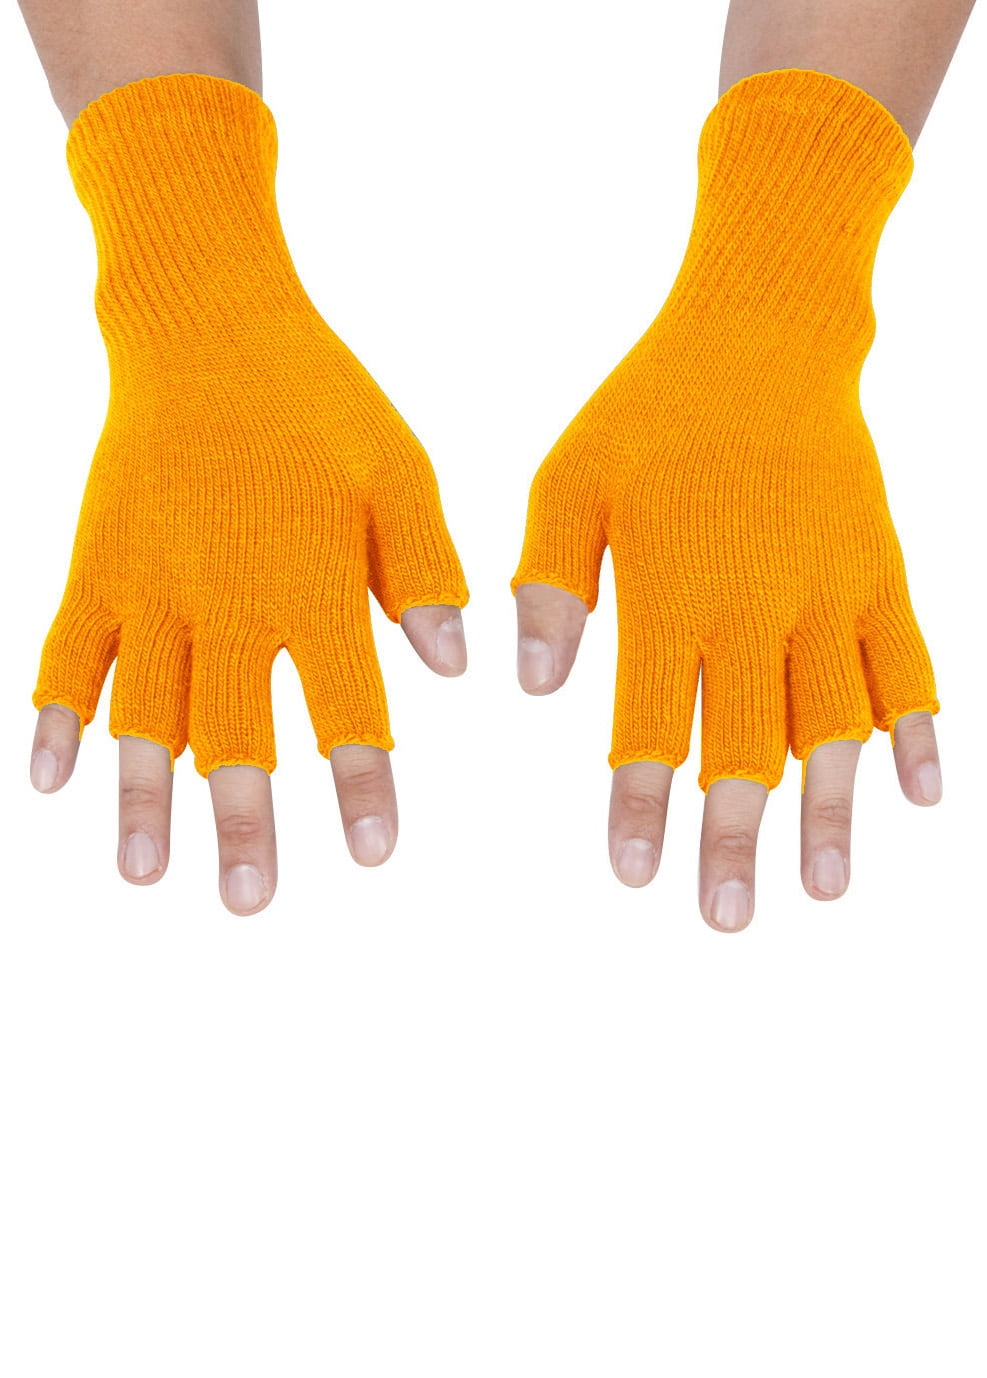 Fingerless Gloves, Unisex Stretchy Threads Blue Navy Warm Half Gravity Knit Finger